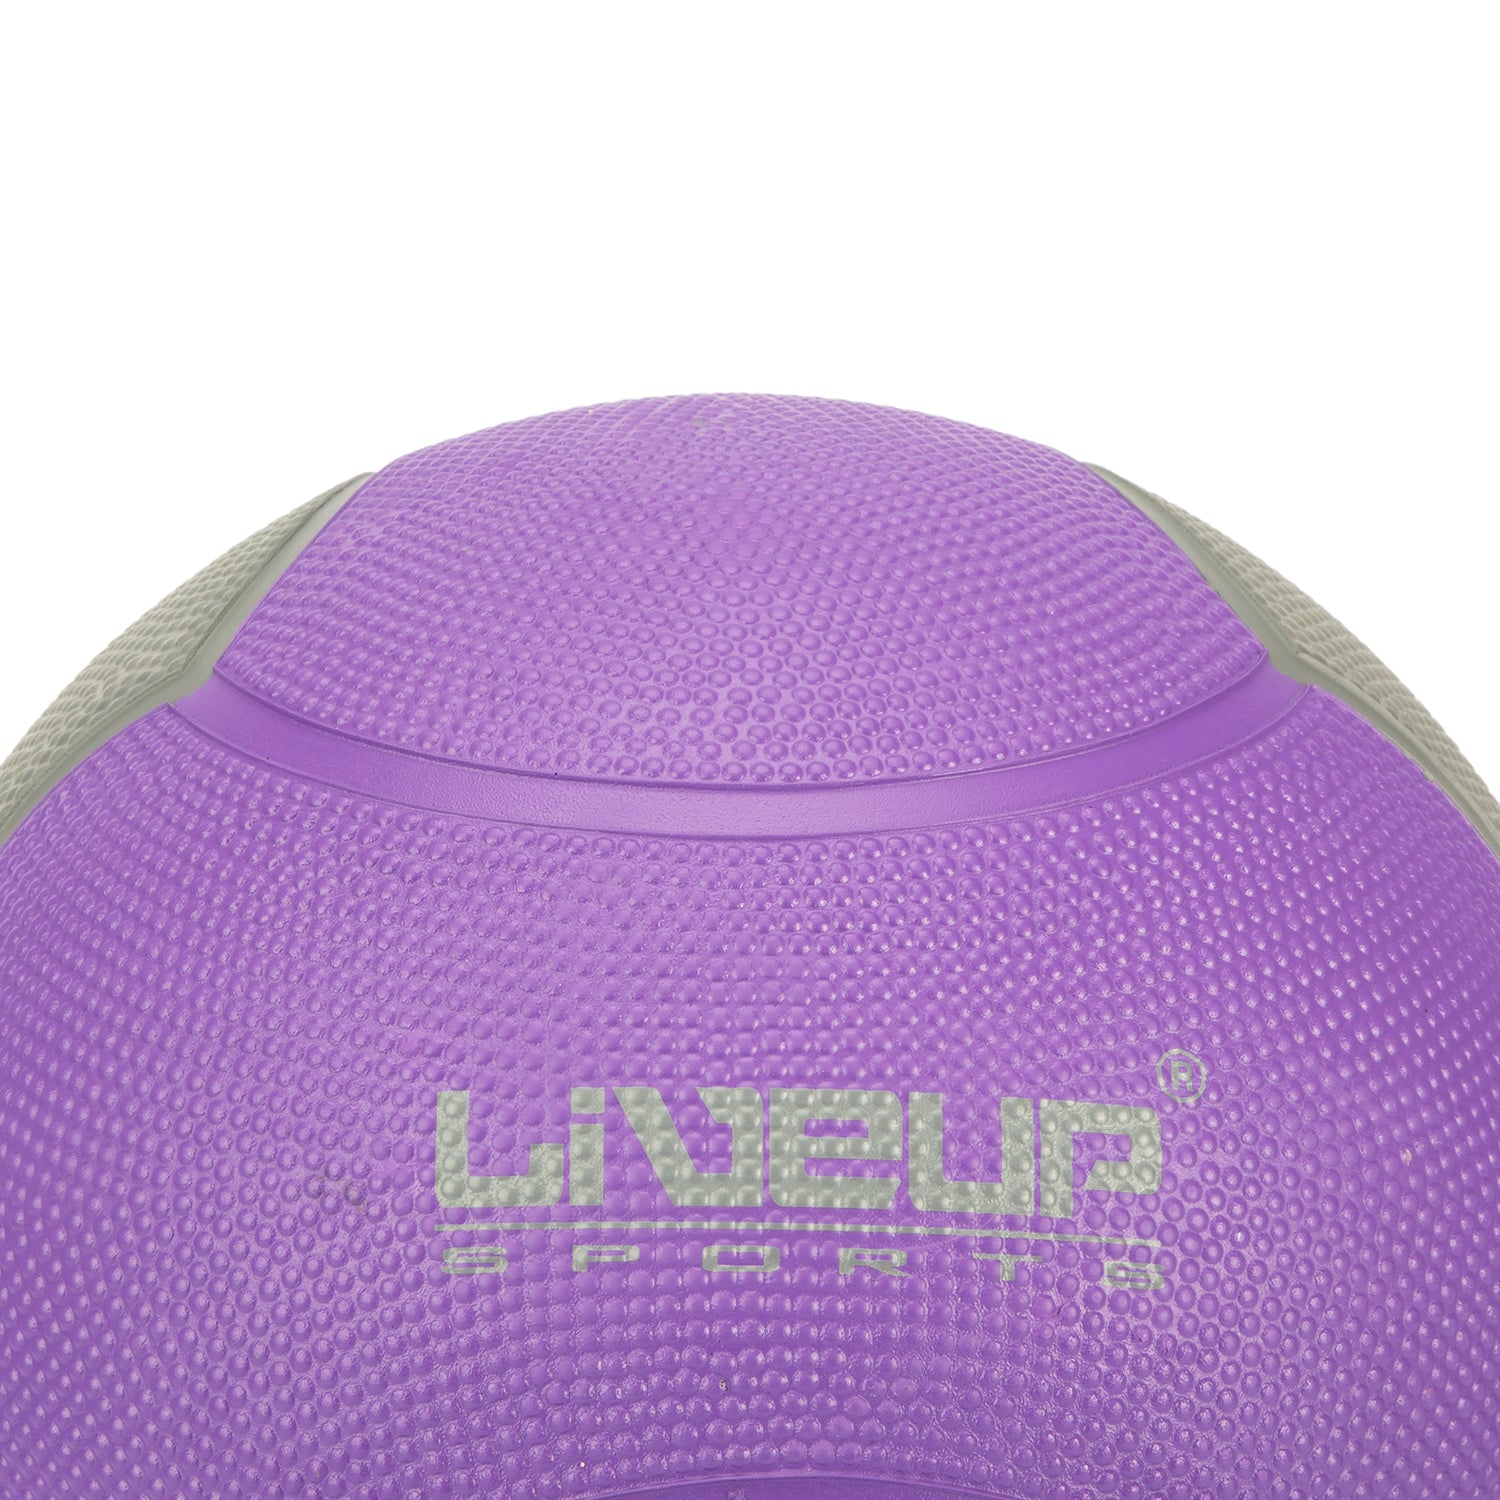 Rubber Medicine Ball - 2kg - Live Up Sports